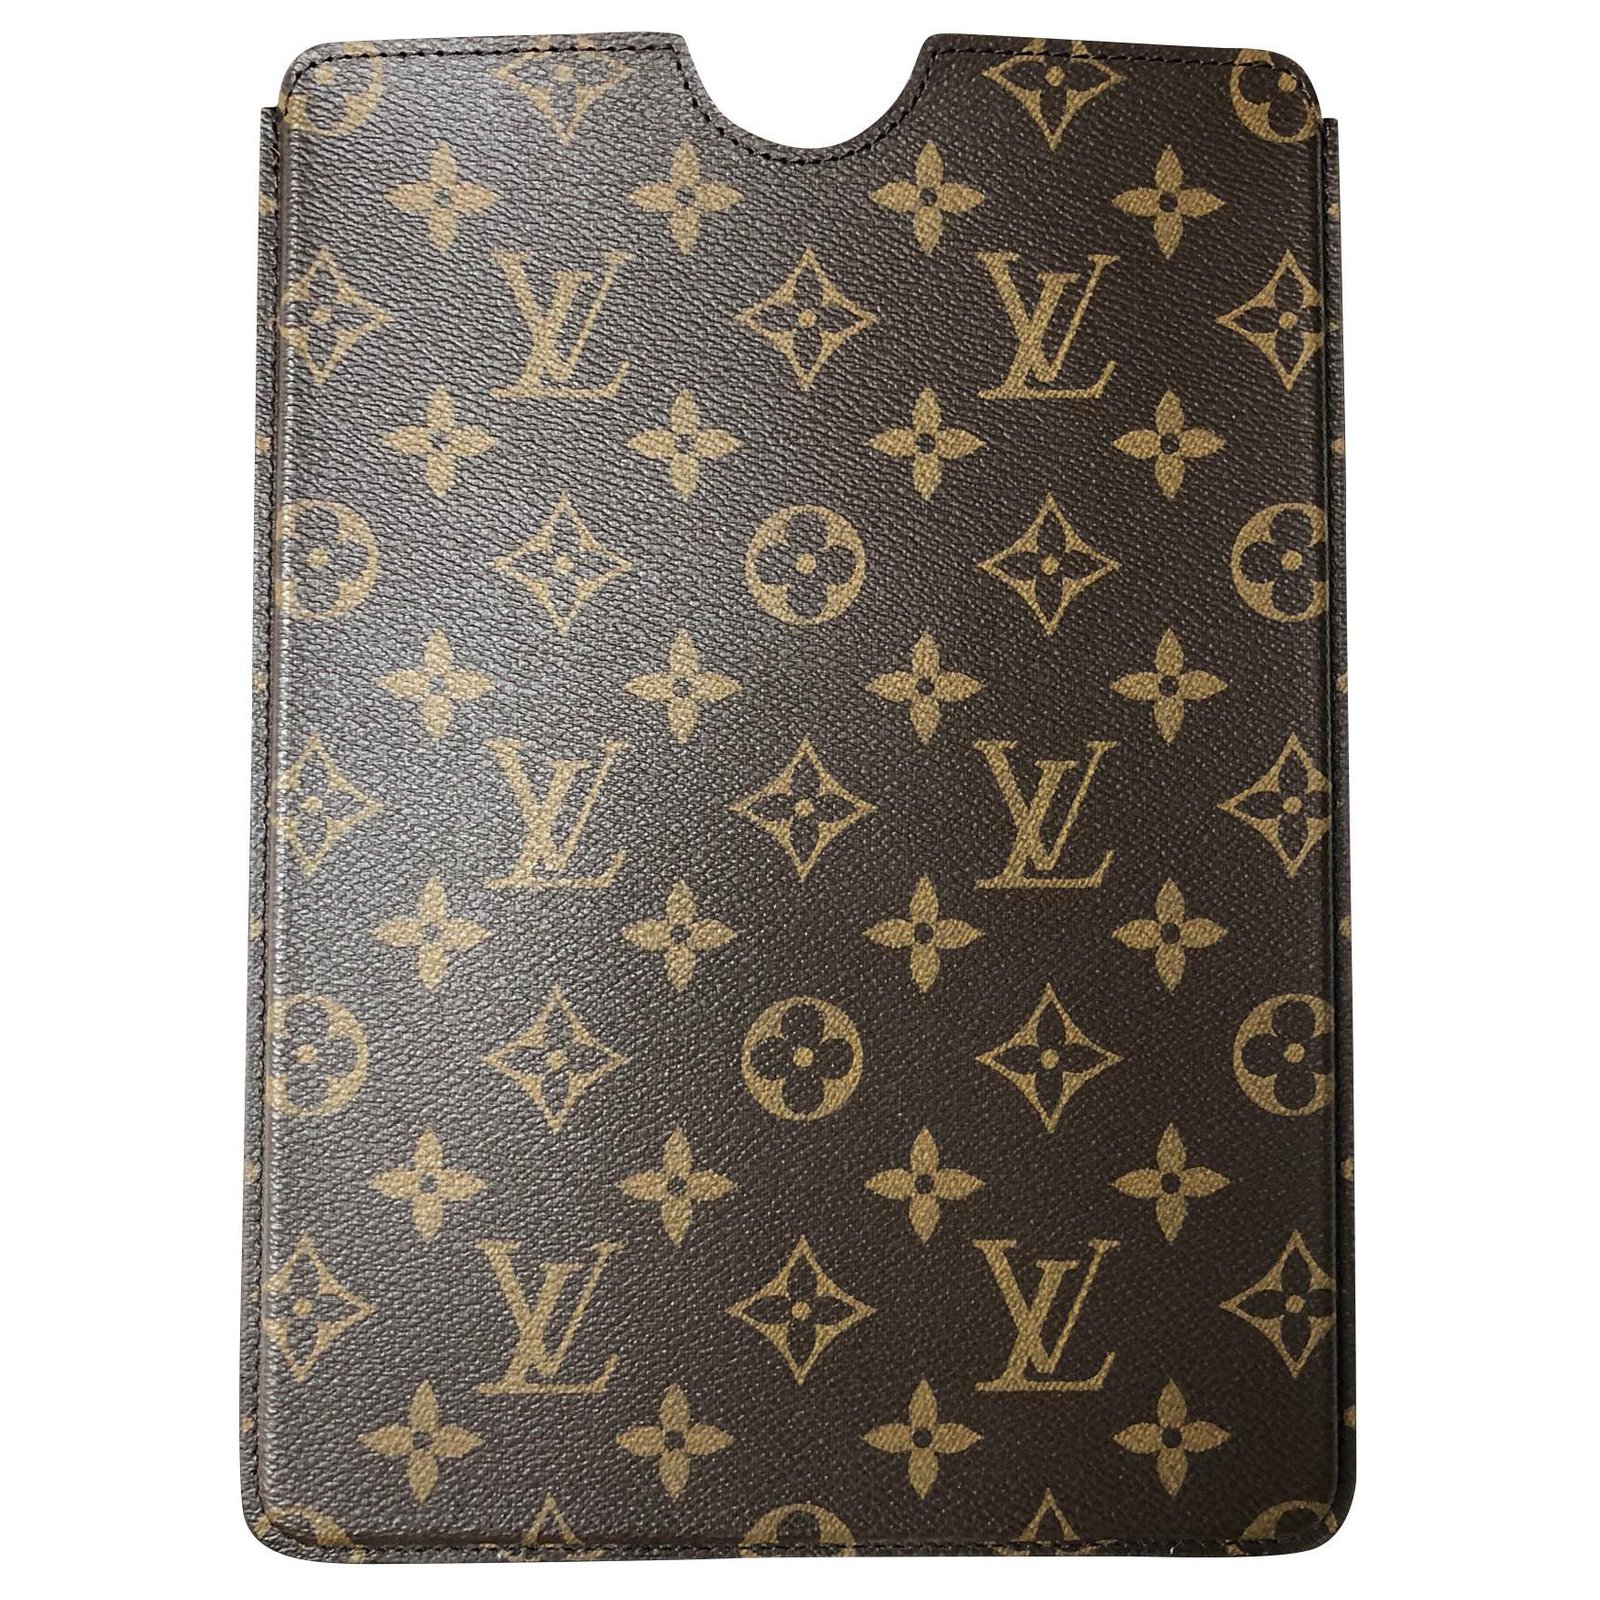 Vuitton iPad Cover 